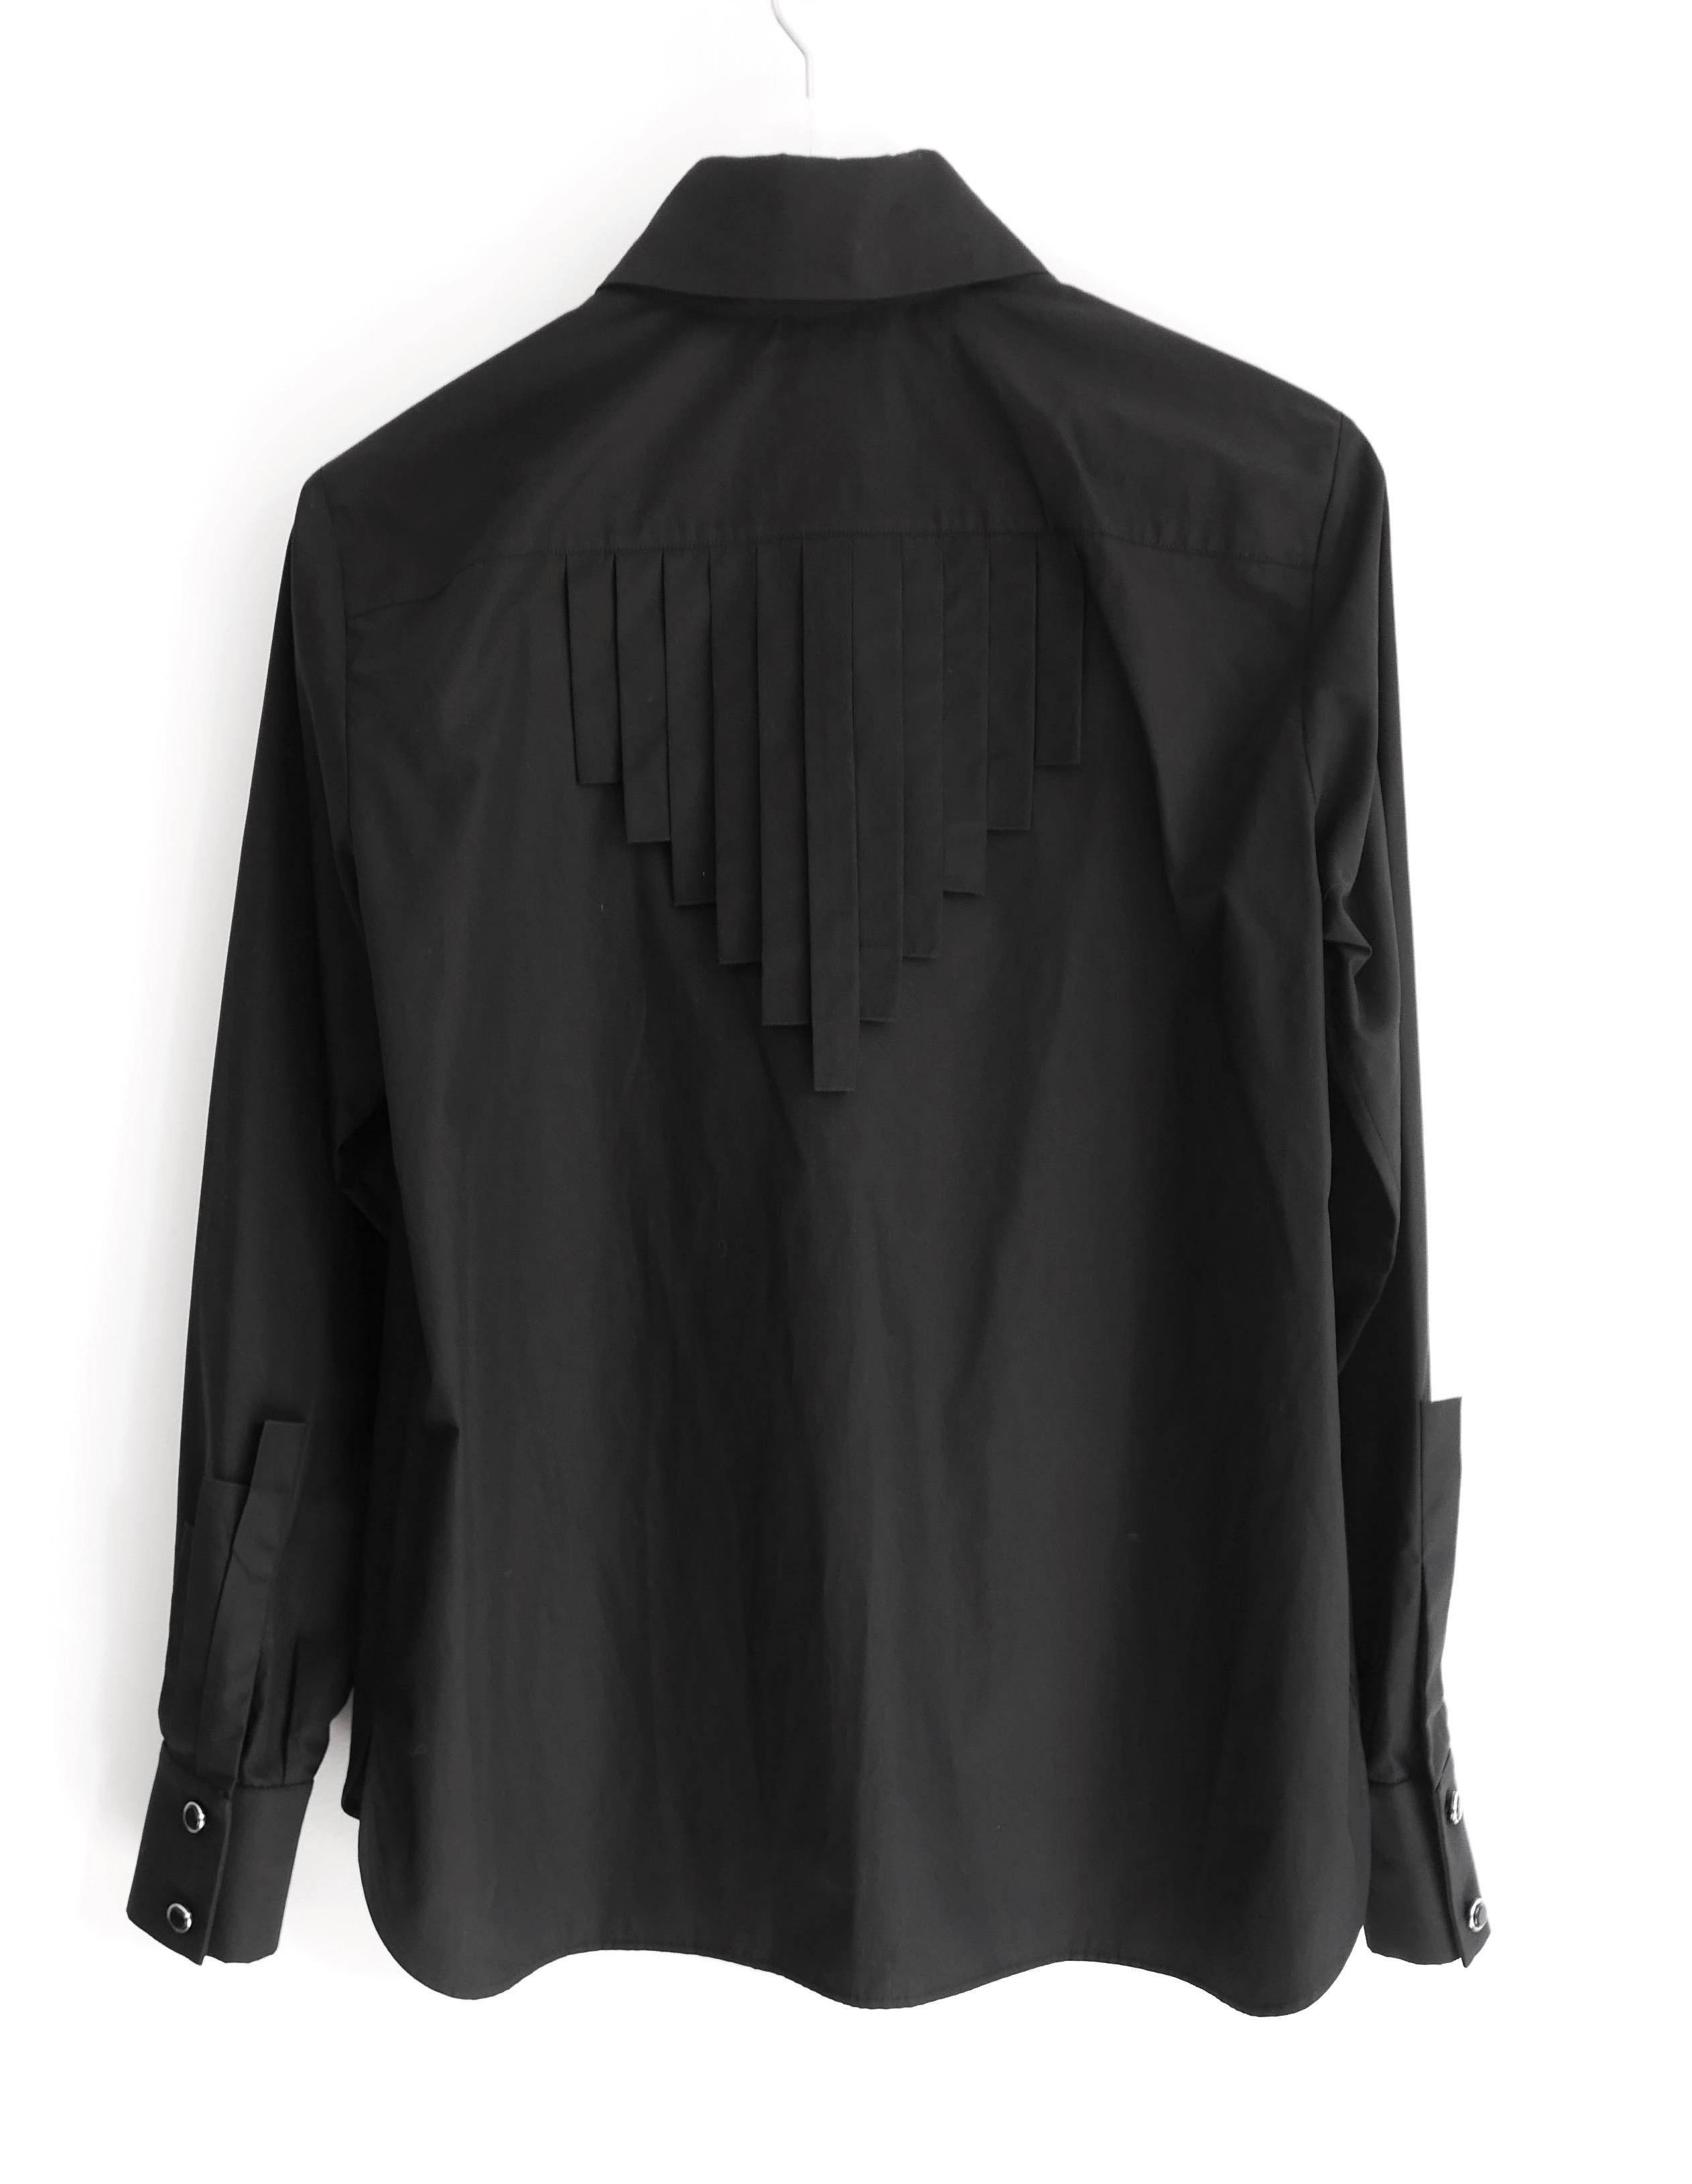 Women's Chanel AW07 Black Tuxedo Shirt w/Bow Tie For Sale